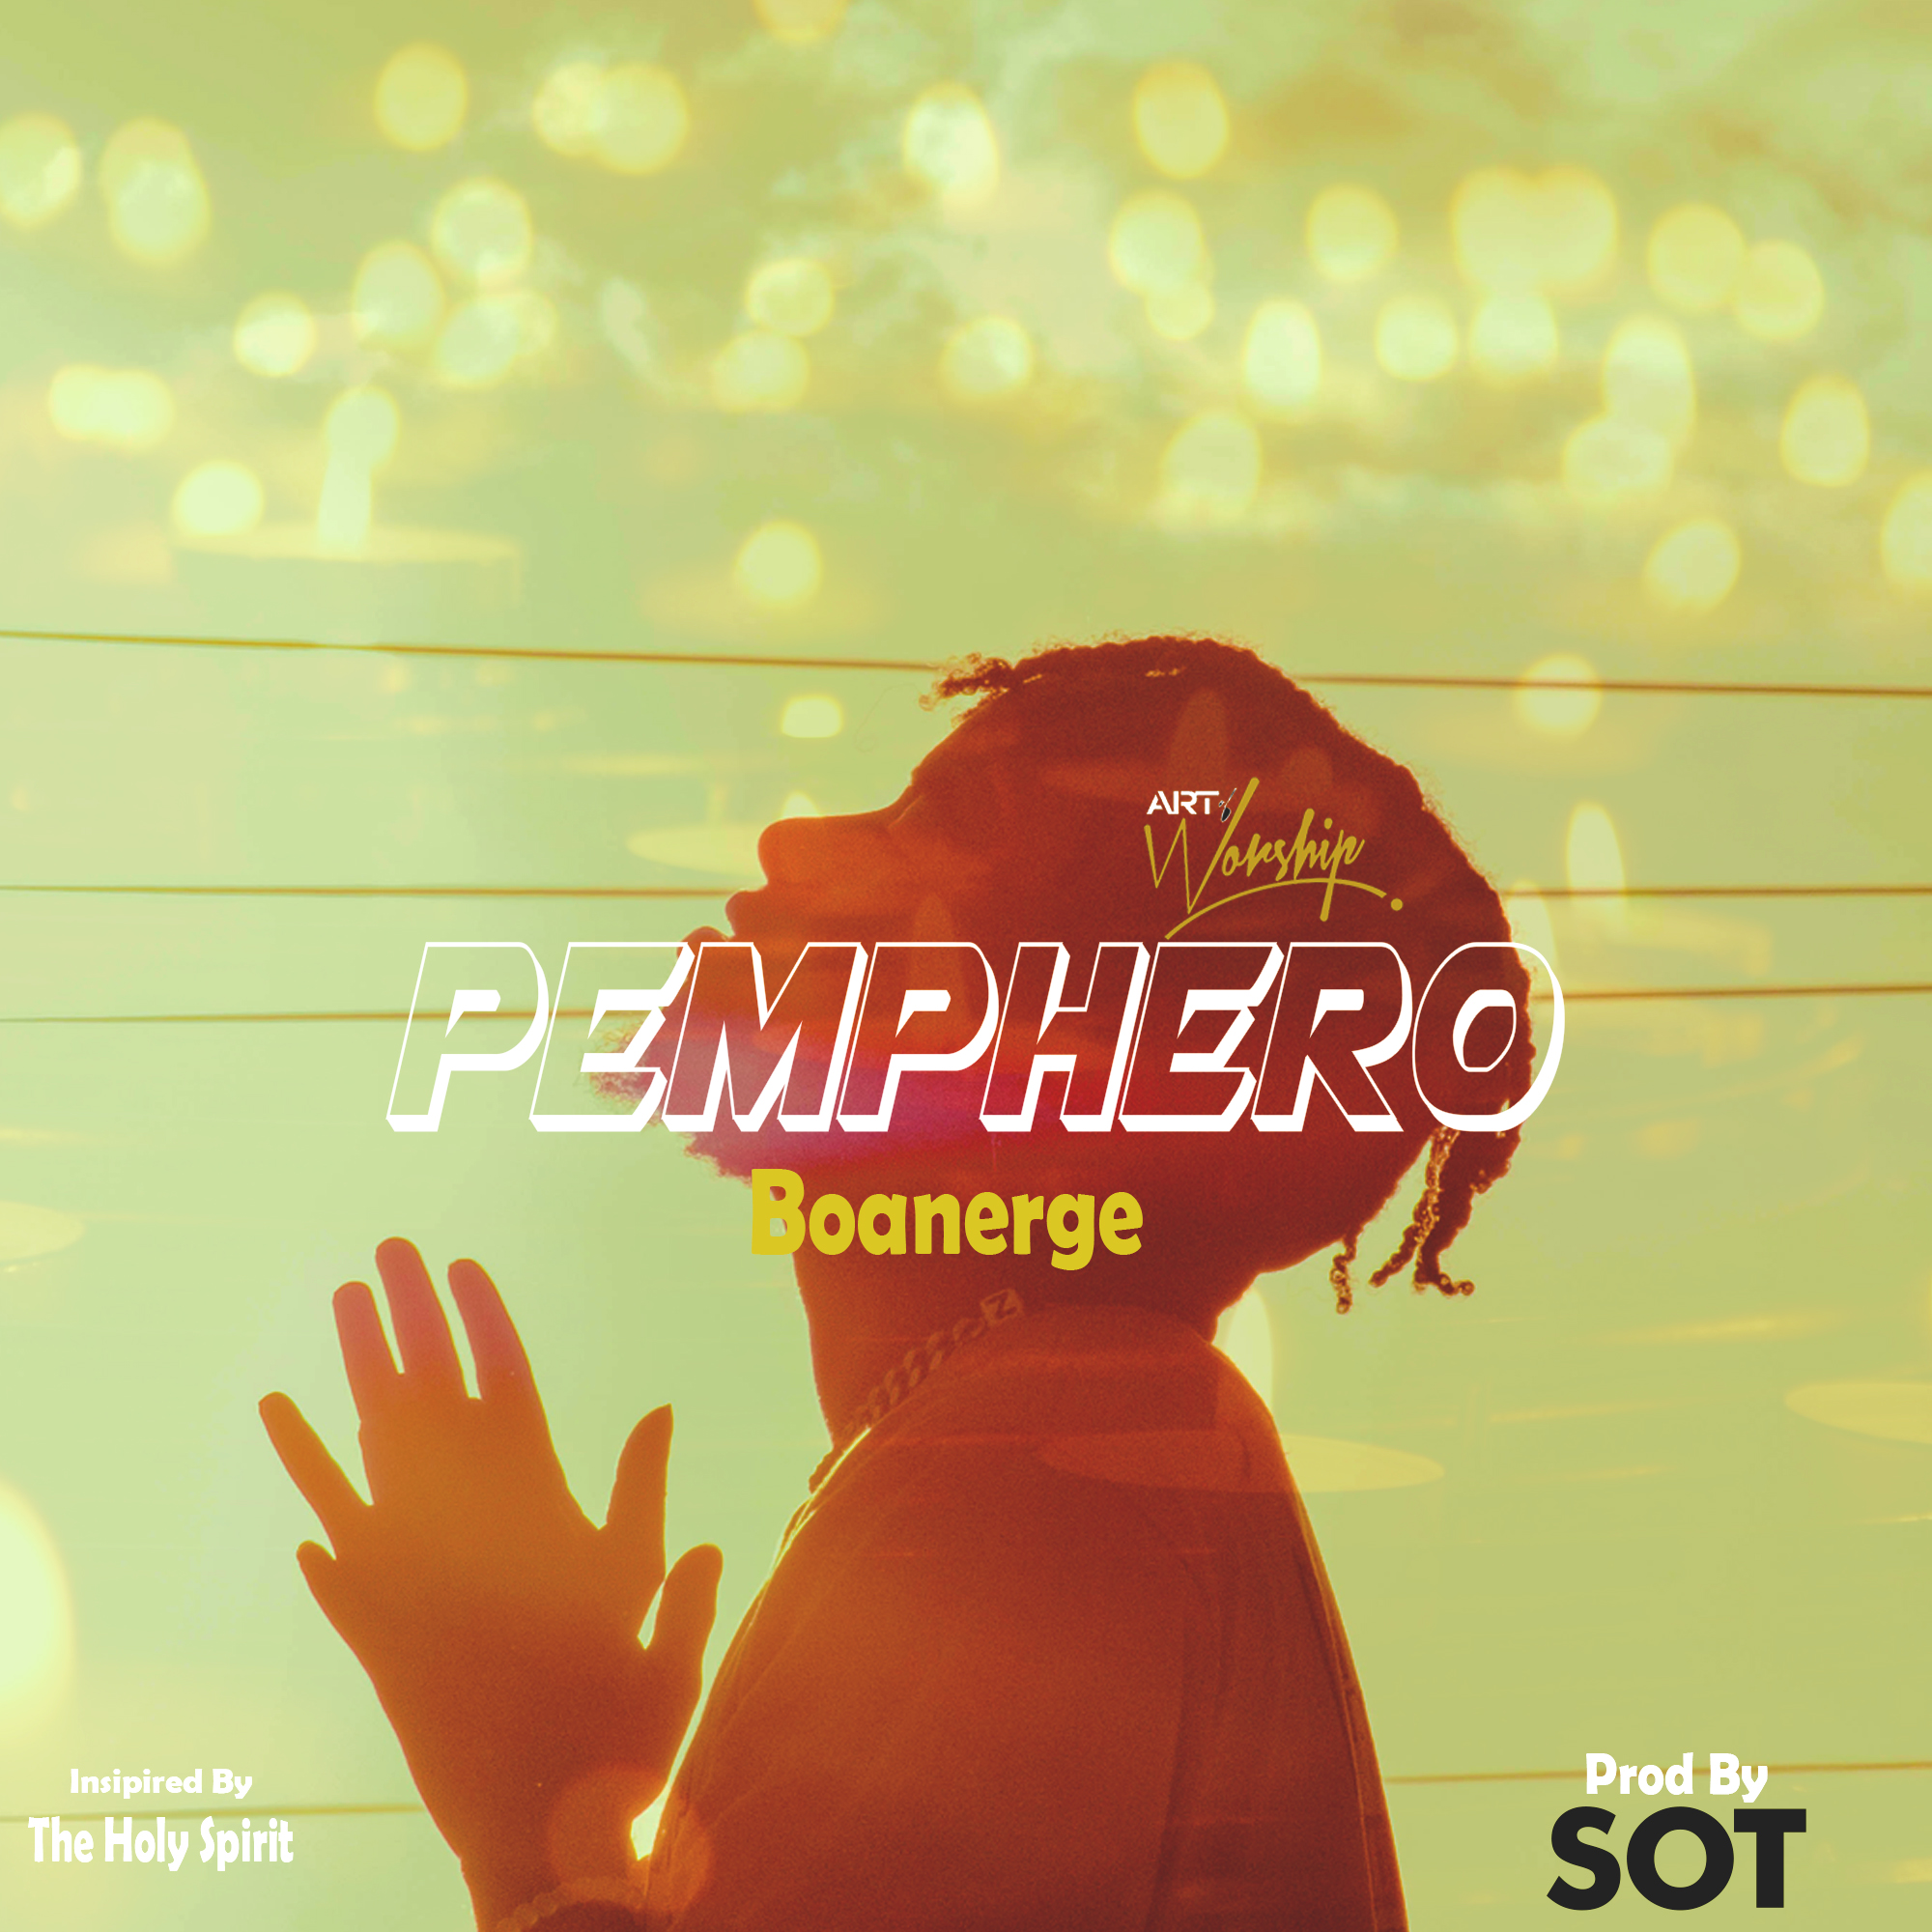  [Music Download] Boanerge – Pemphero